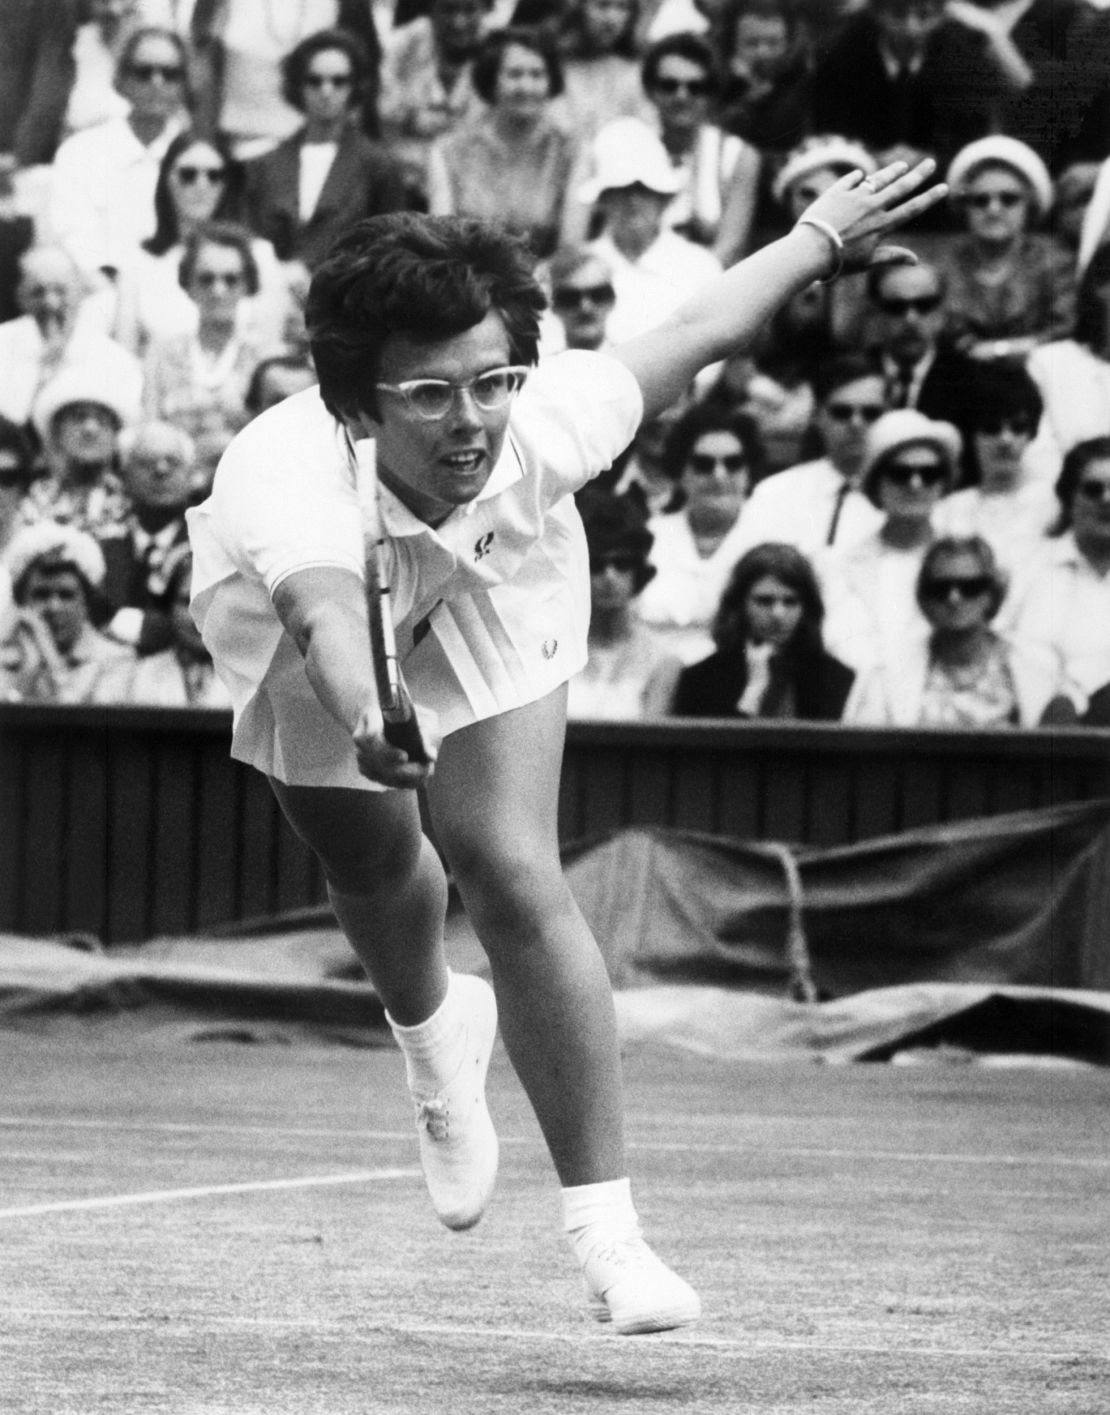 American tennis legend Billie Jean King during the 1967 Wimbledon championships.